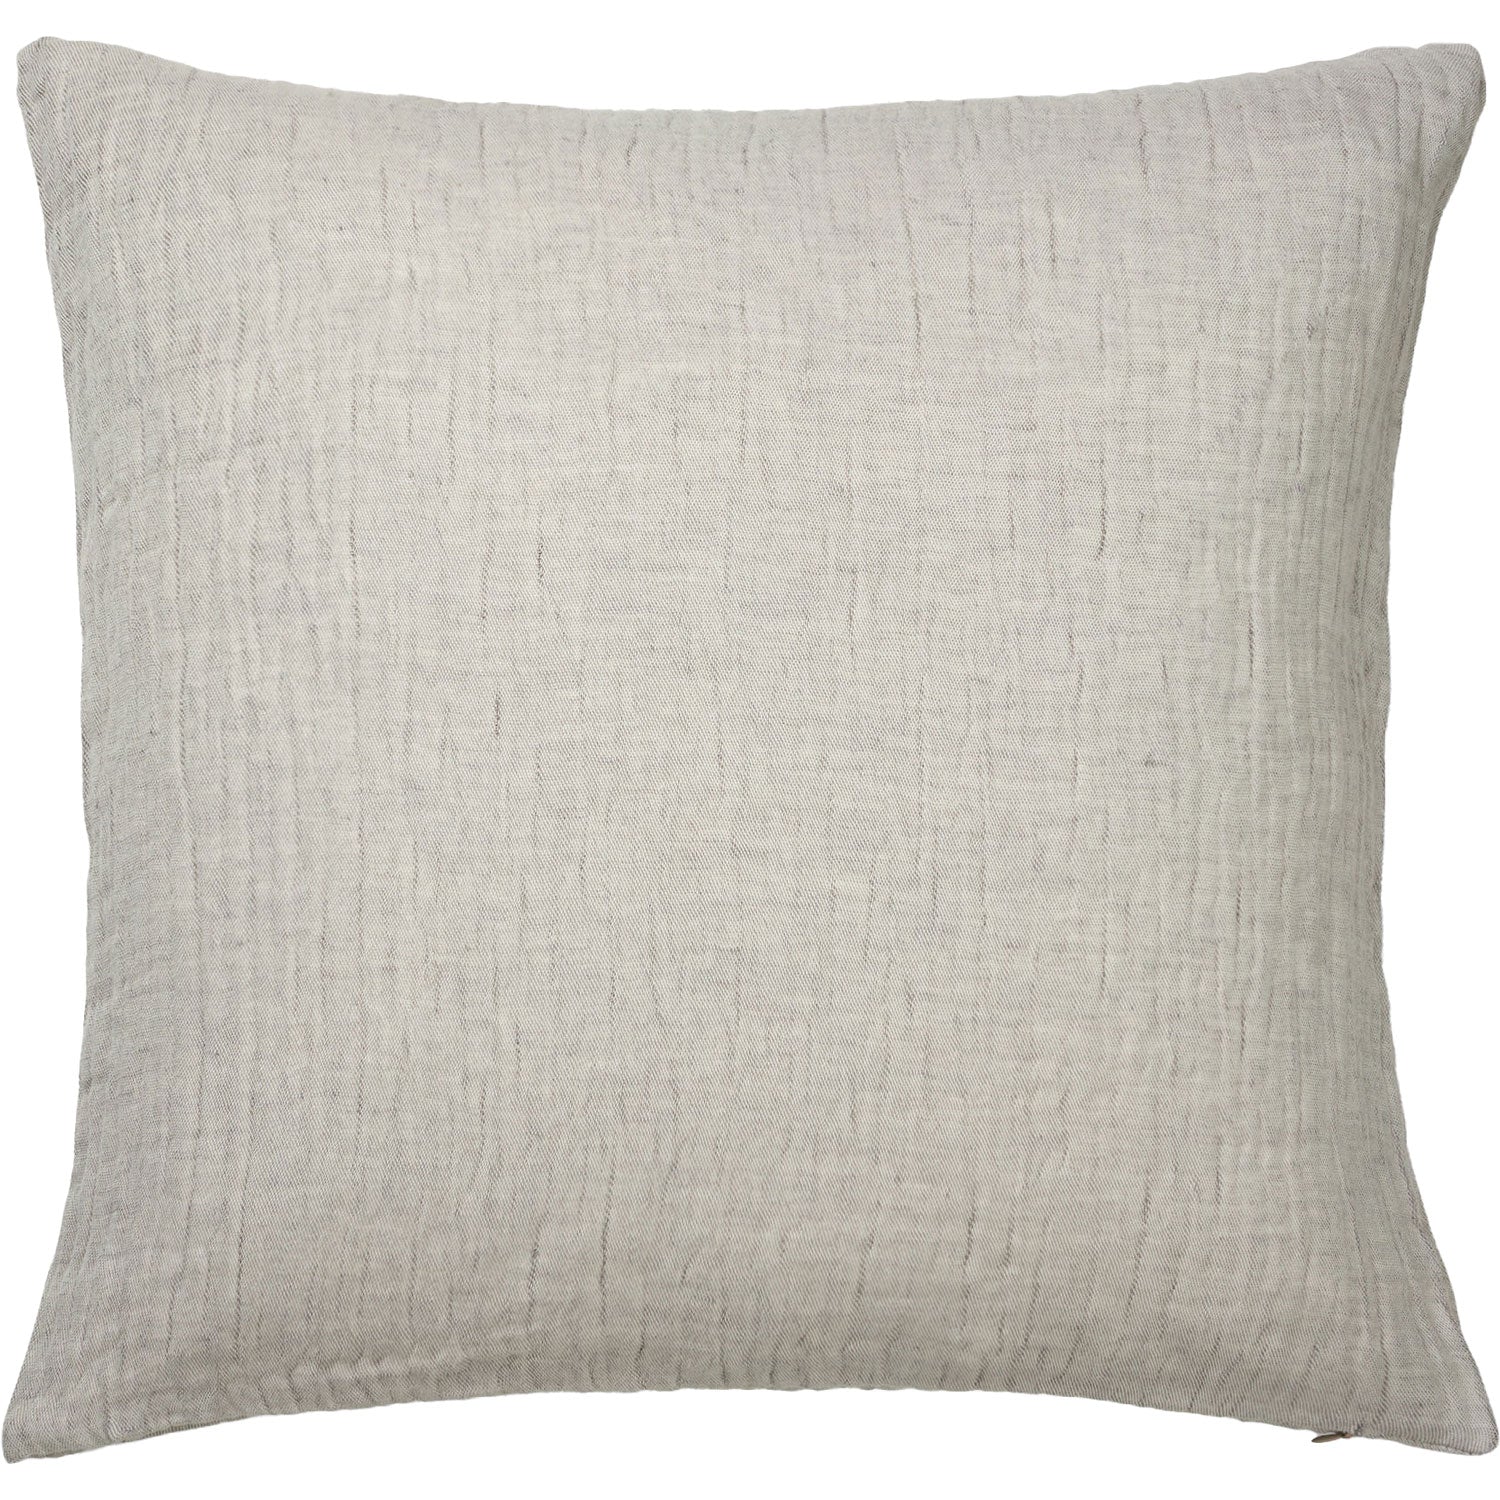 Lavender Pillow Cover, Elvang, Fairtrade & Natural